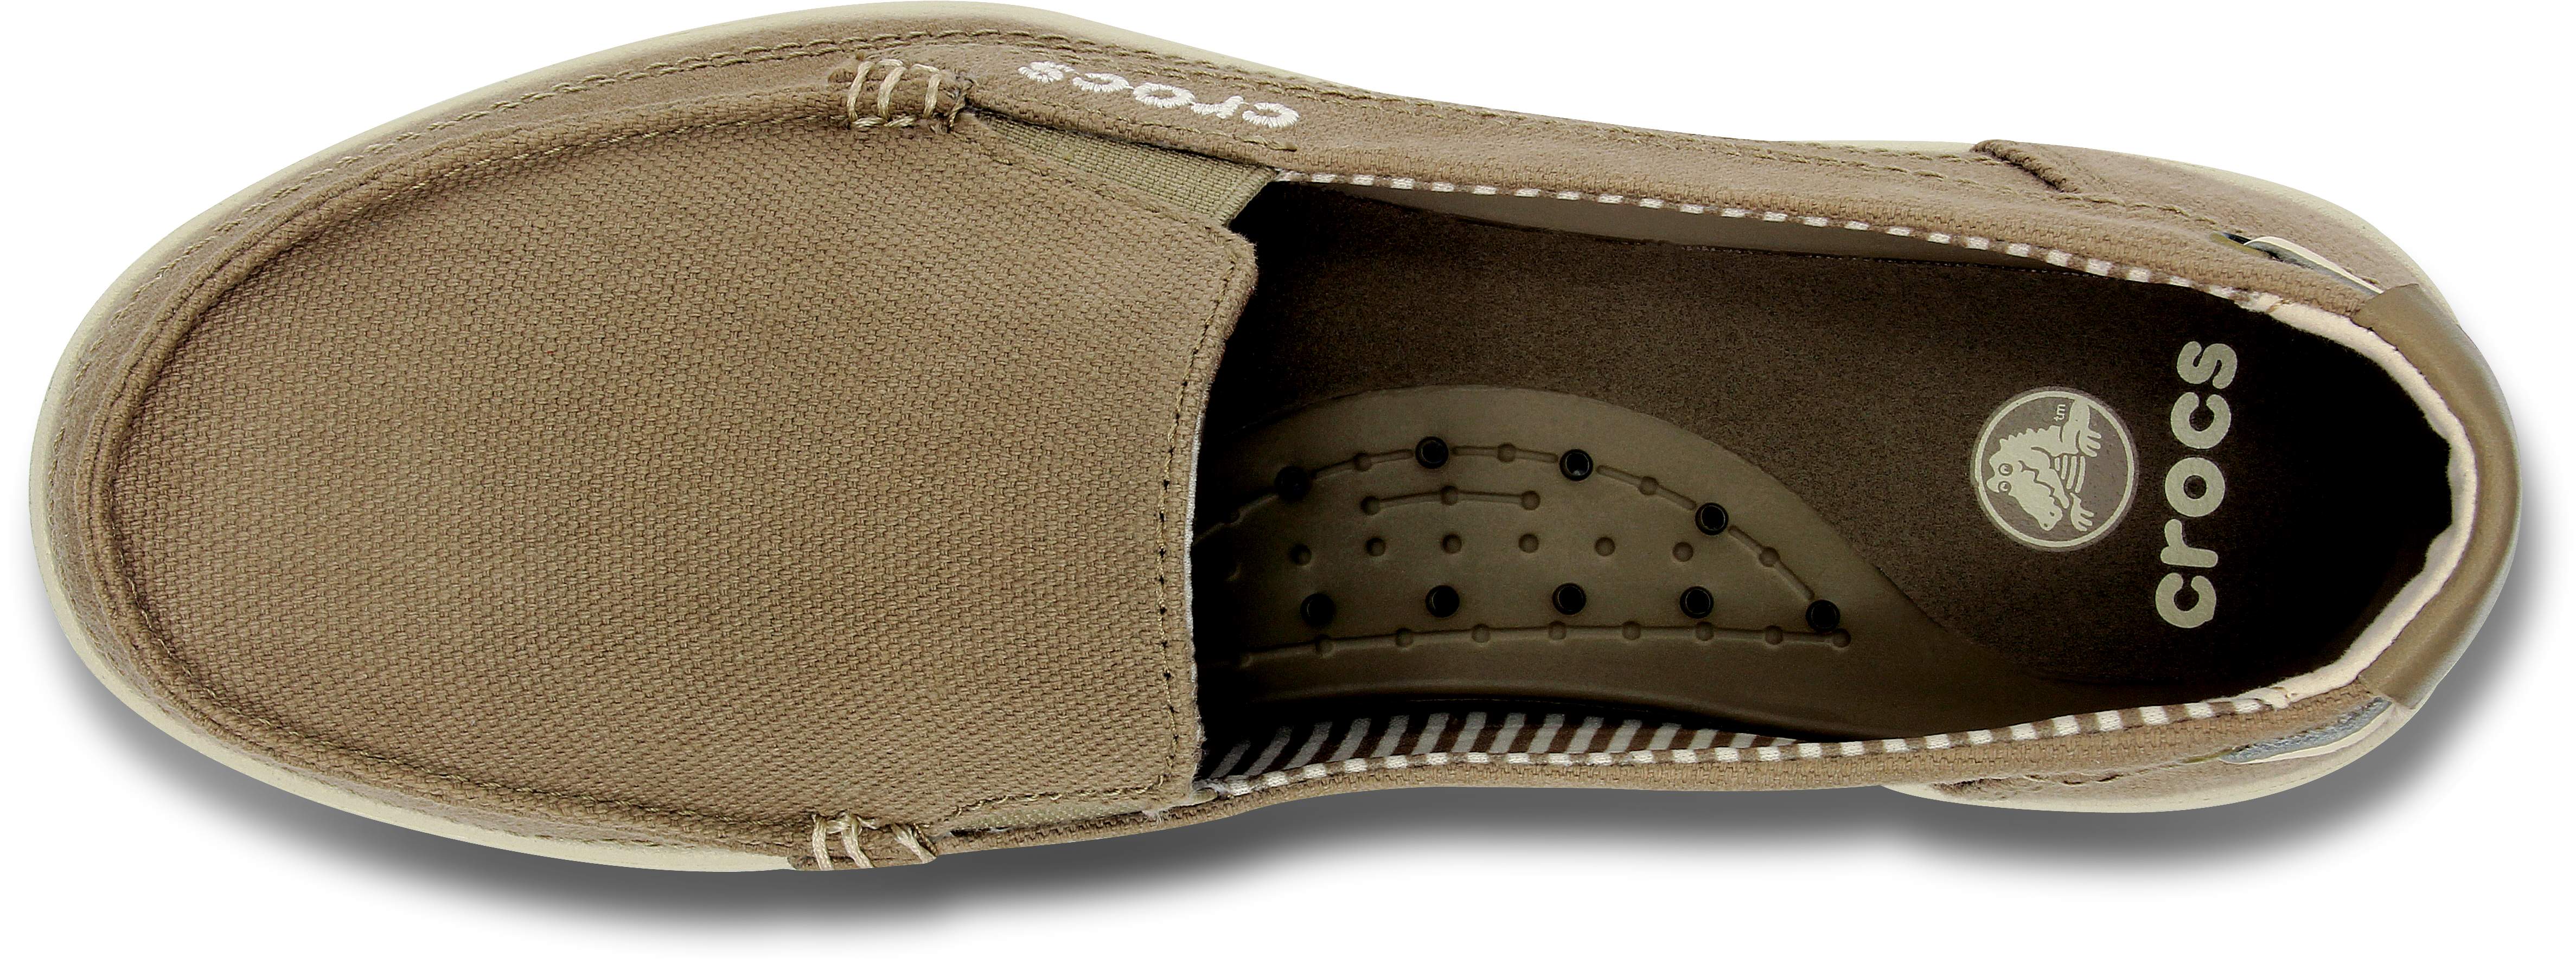 crocs walu canvas loafer